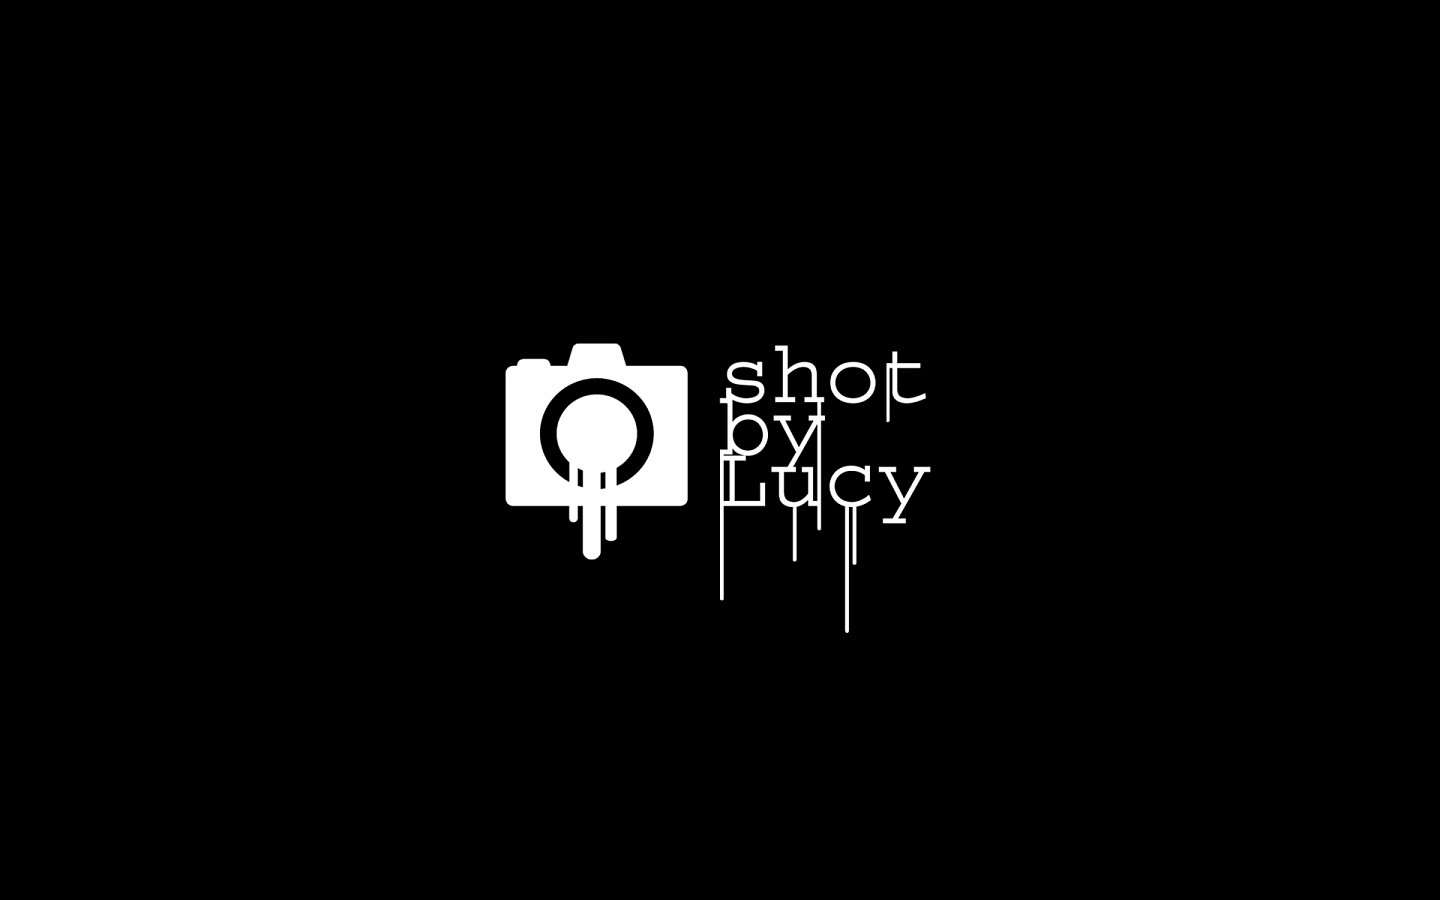 ShotByLucy, Logo Design in Mono Reversed